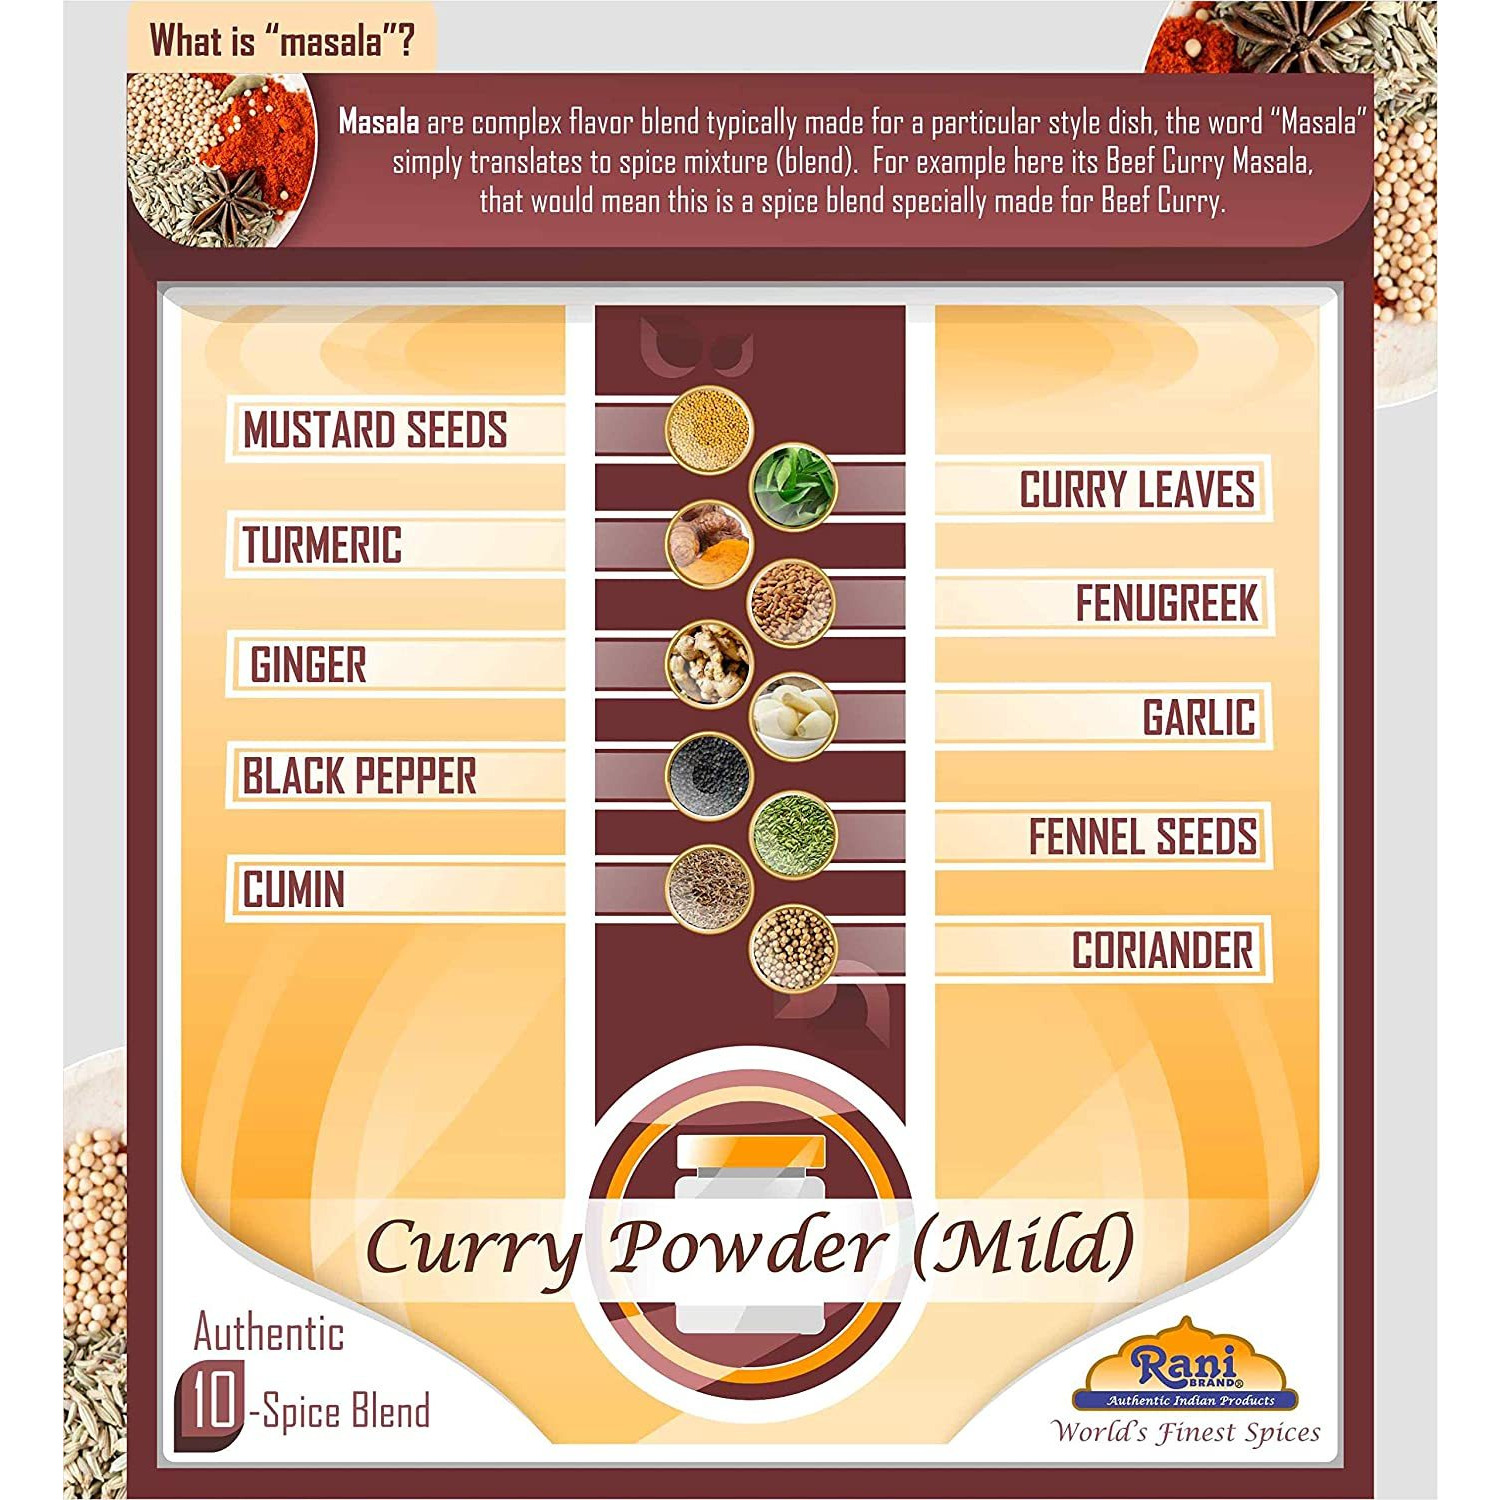 Rani Curry Powder Mild Natural 10-Spice Blend 25 Pound (400 Ounce) 11.36kg ~ Bulk Box ~ Salt Free | Vegan | No Colors | Gluten Friendly | NON-GMO | NO Chili or Peppers